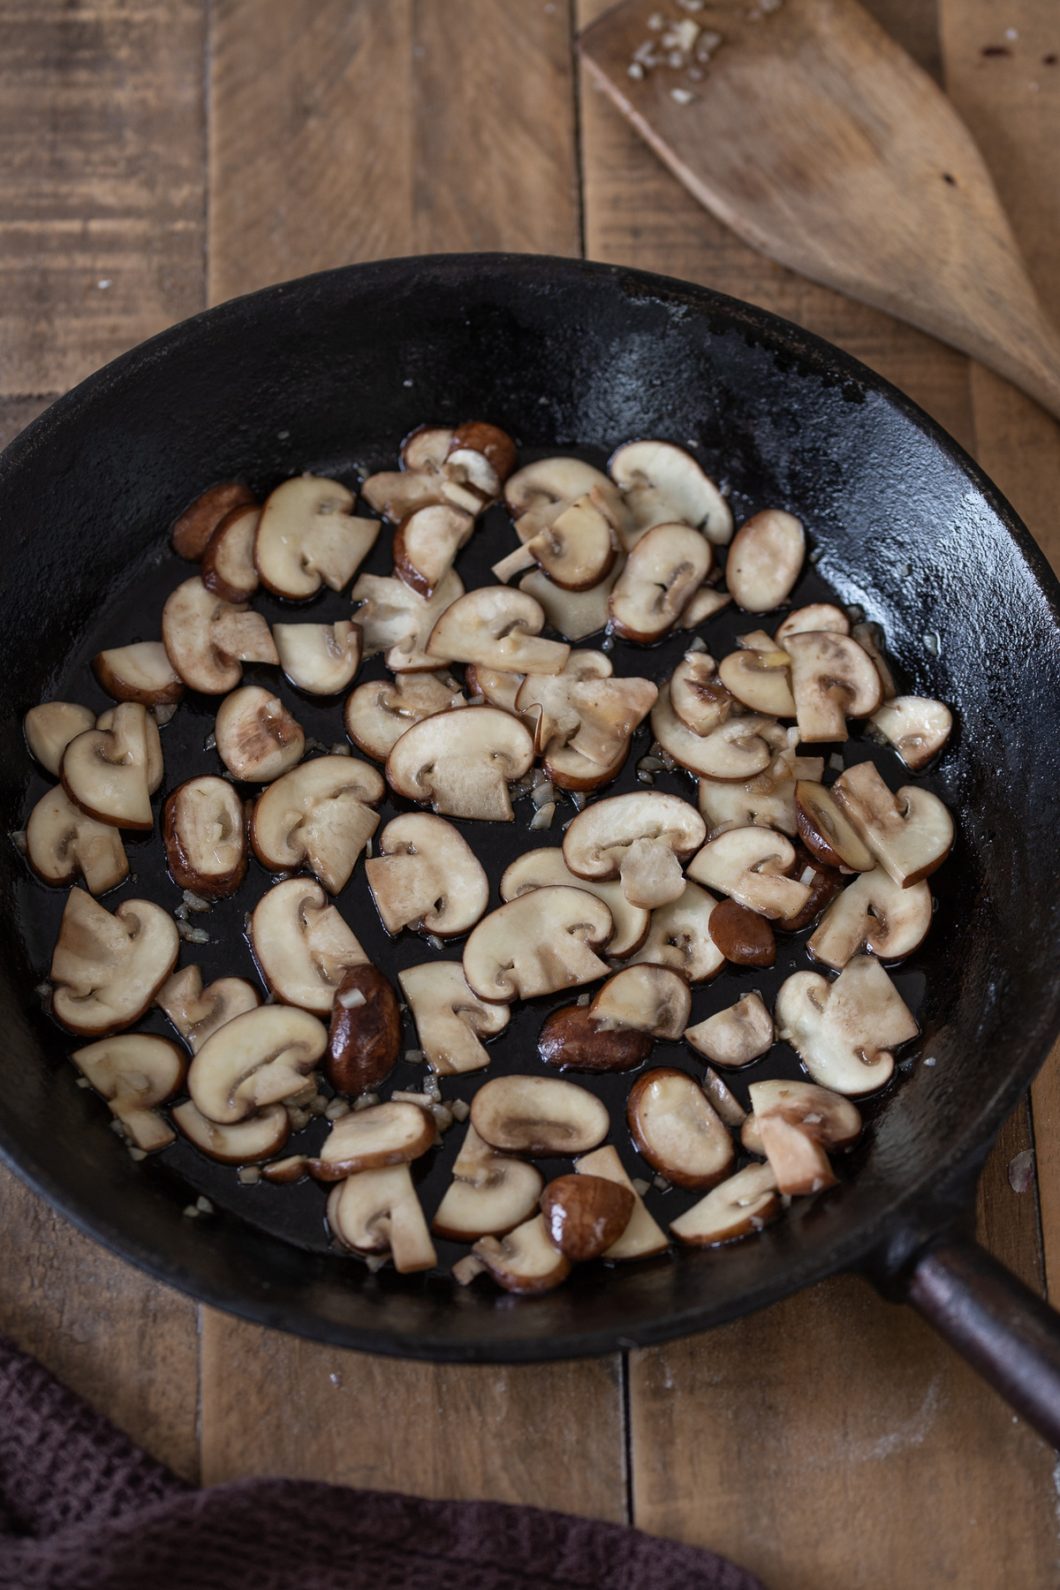 Baby bella mushrooms sautéed in a cast iron pan.